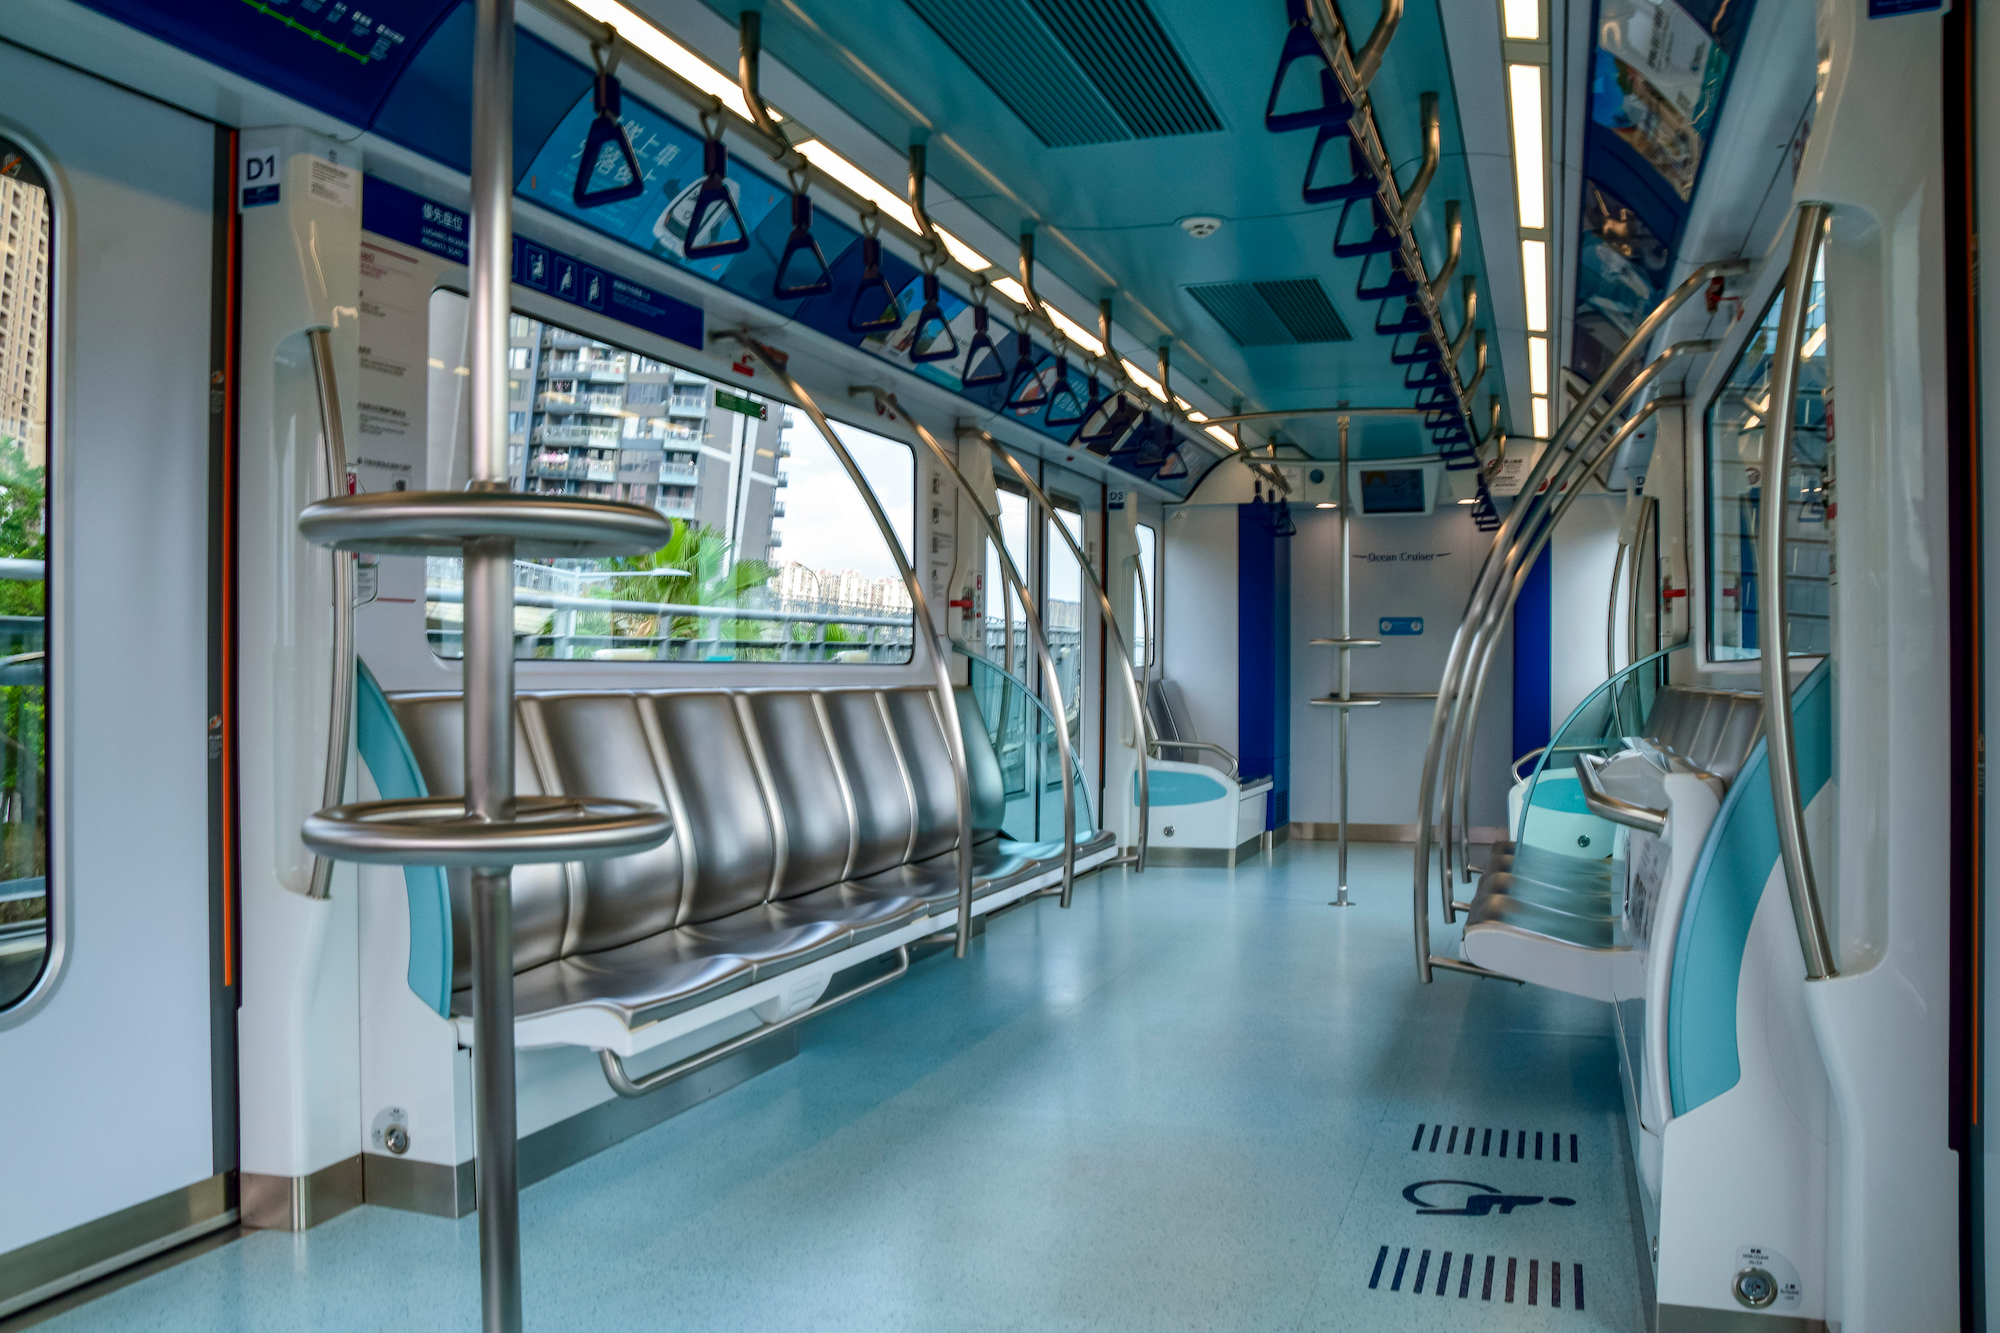 Macao Light Rail Transit (LRT) system